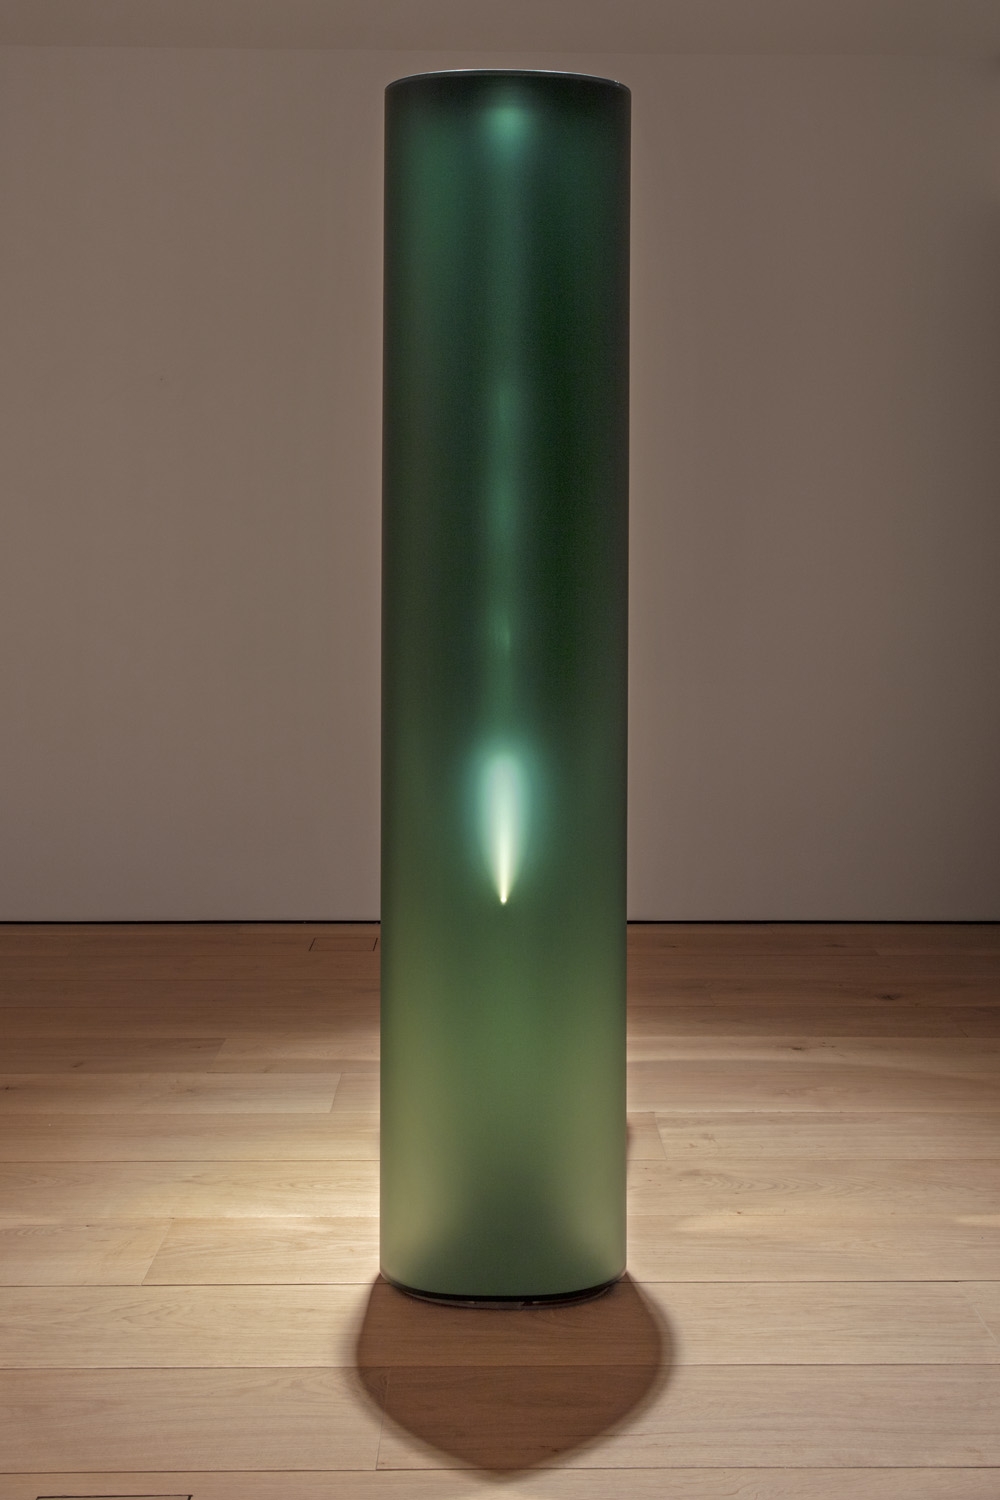 HELEN PASHGIAN, Untitled (green), 2009